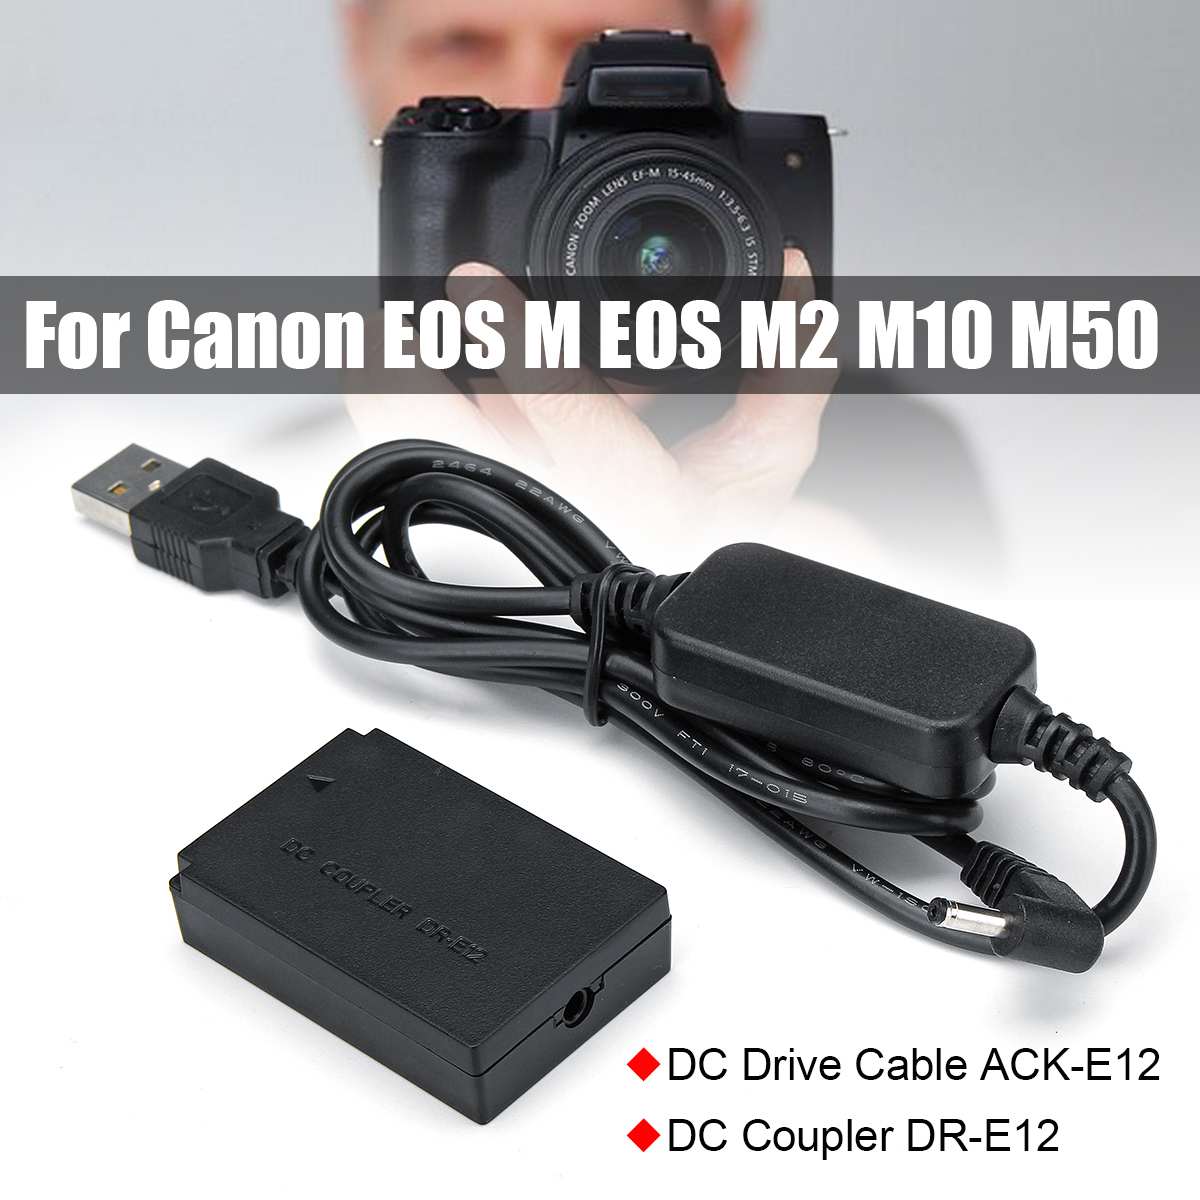 5 V USB kabel DC 8.4 V ACK-E12 Mobiele power bank + DR-E12 DC Coupler LP-E12 dummy batterij voor Canon EOS M EOS M2 M10 M50 camera